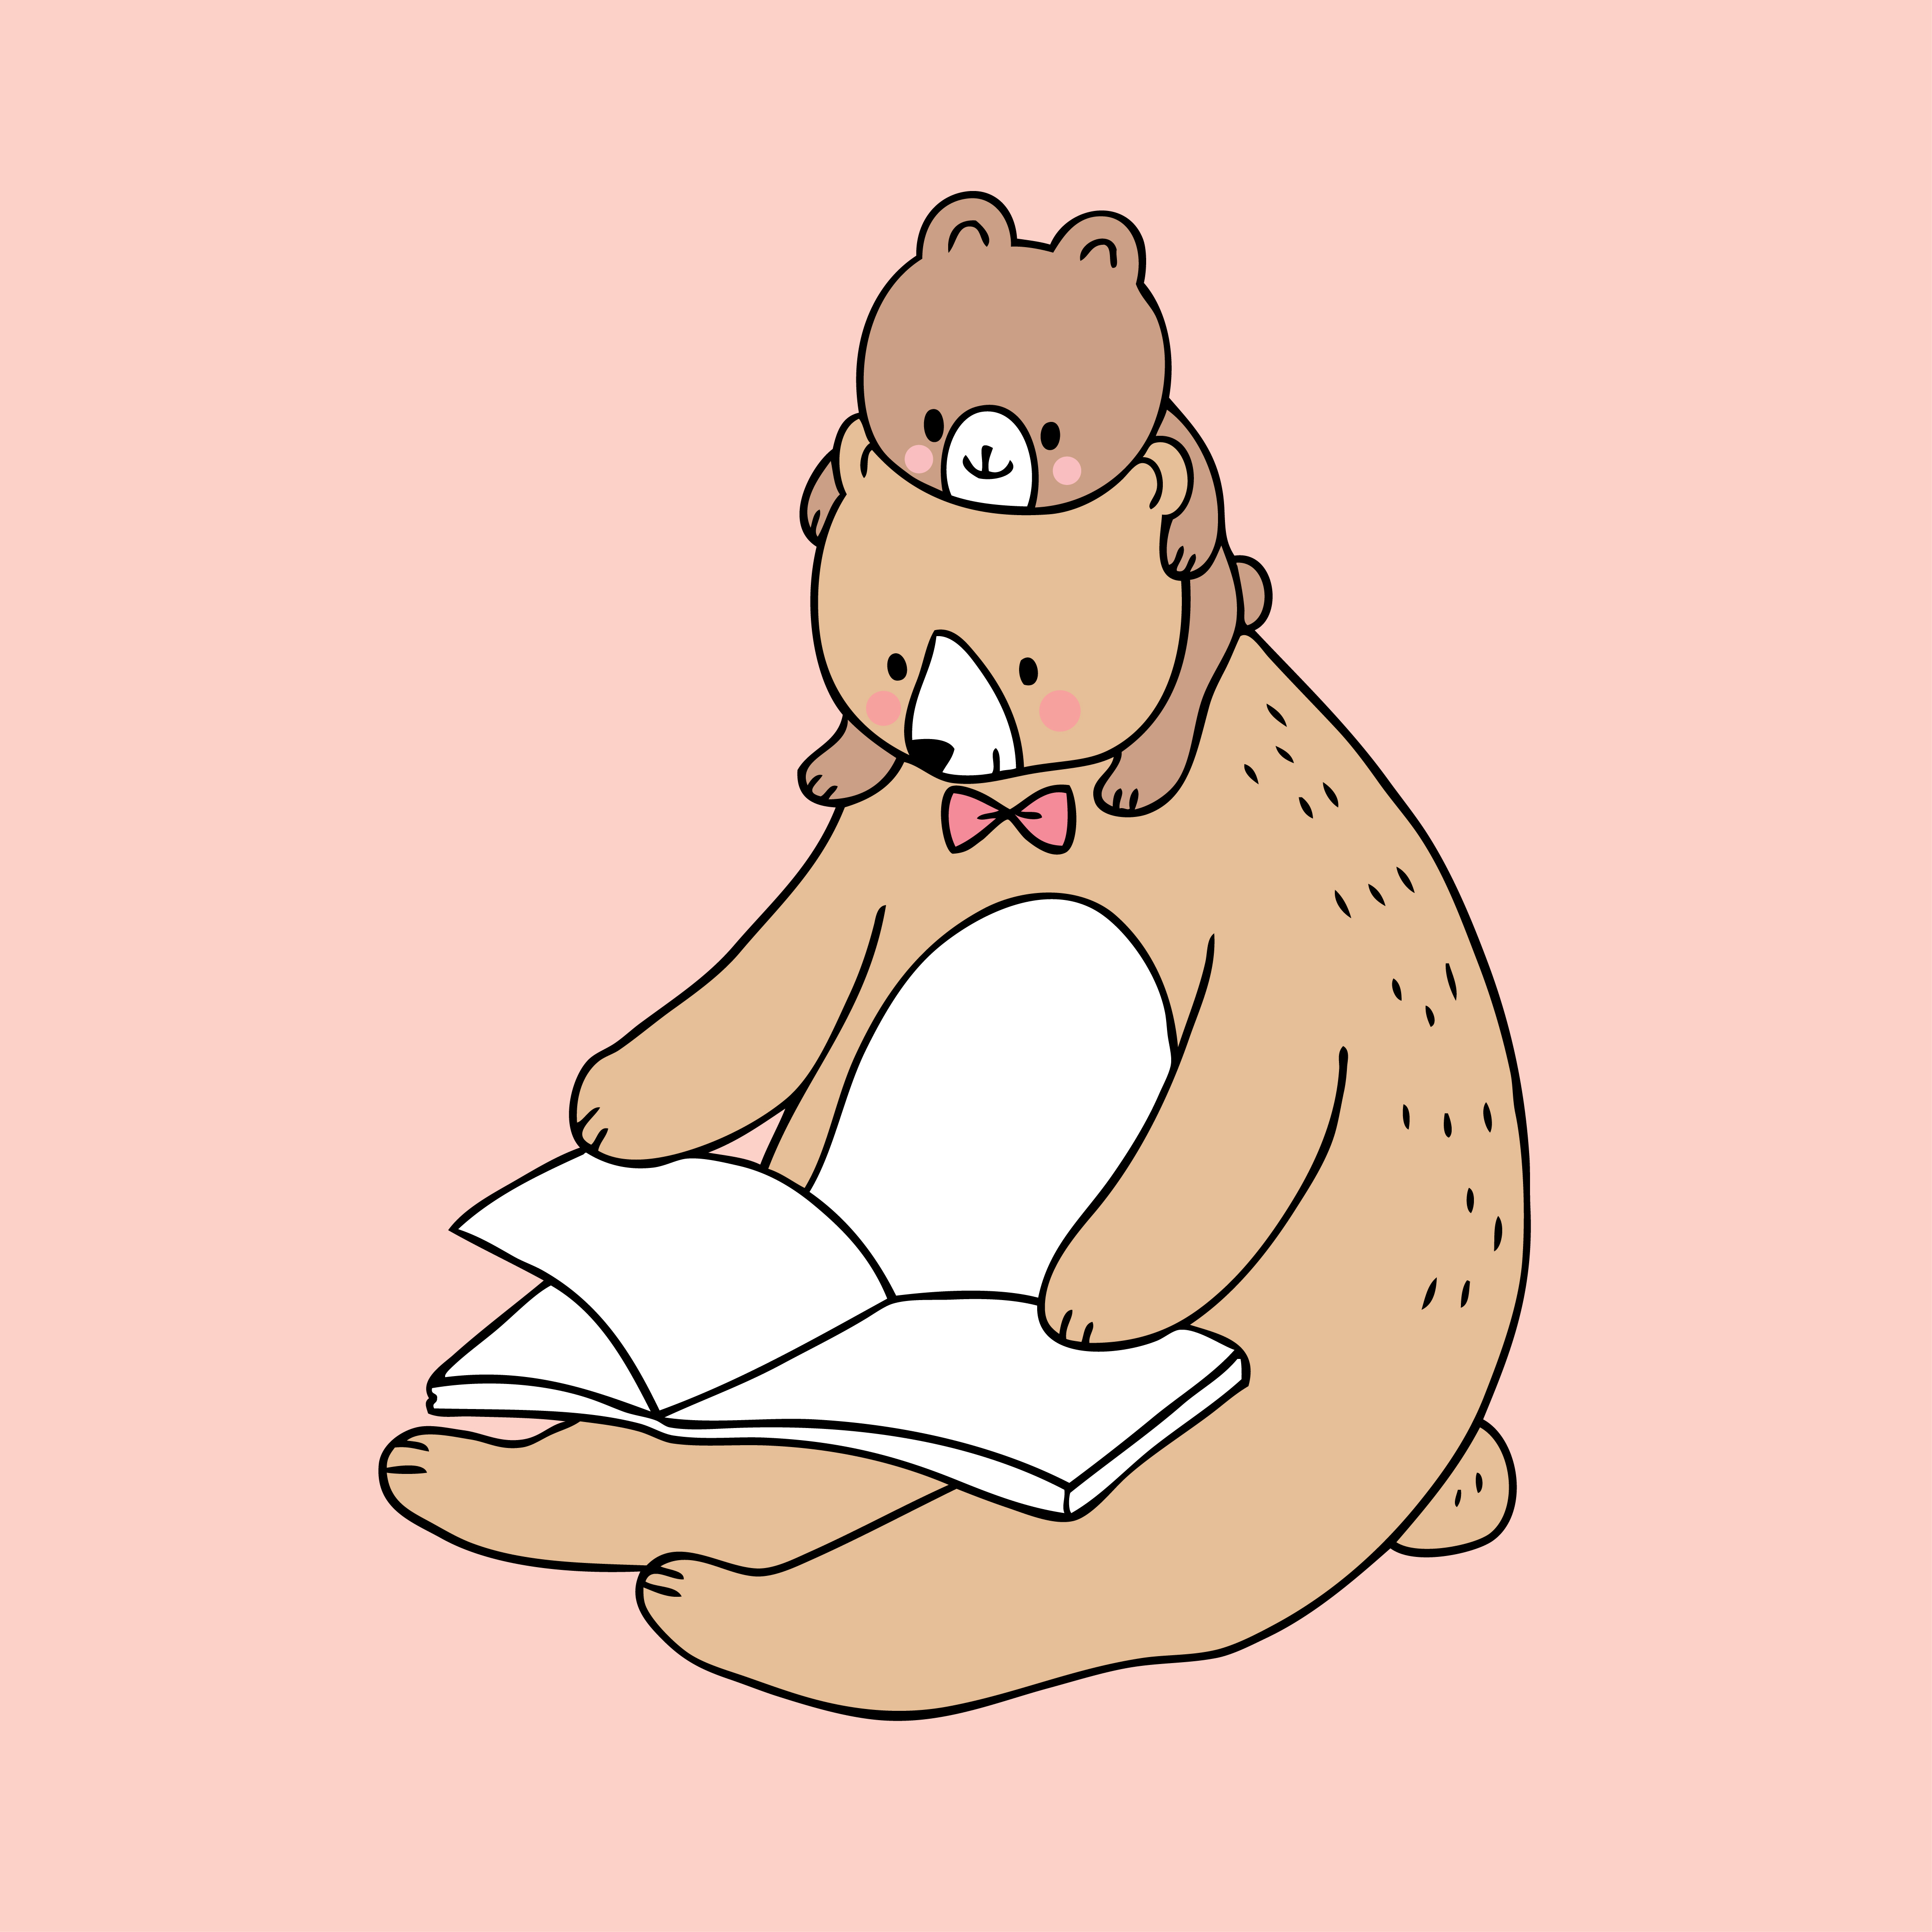 Cartoon Cute Dad And Baby Bear Reading Book Vector Download Free Vectors Clipart Graphics Vector Art